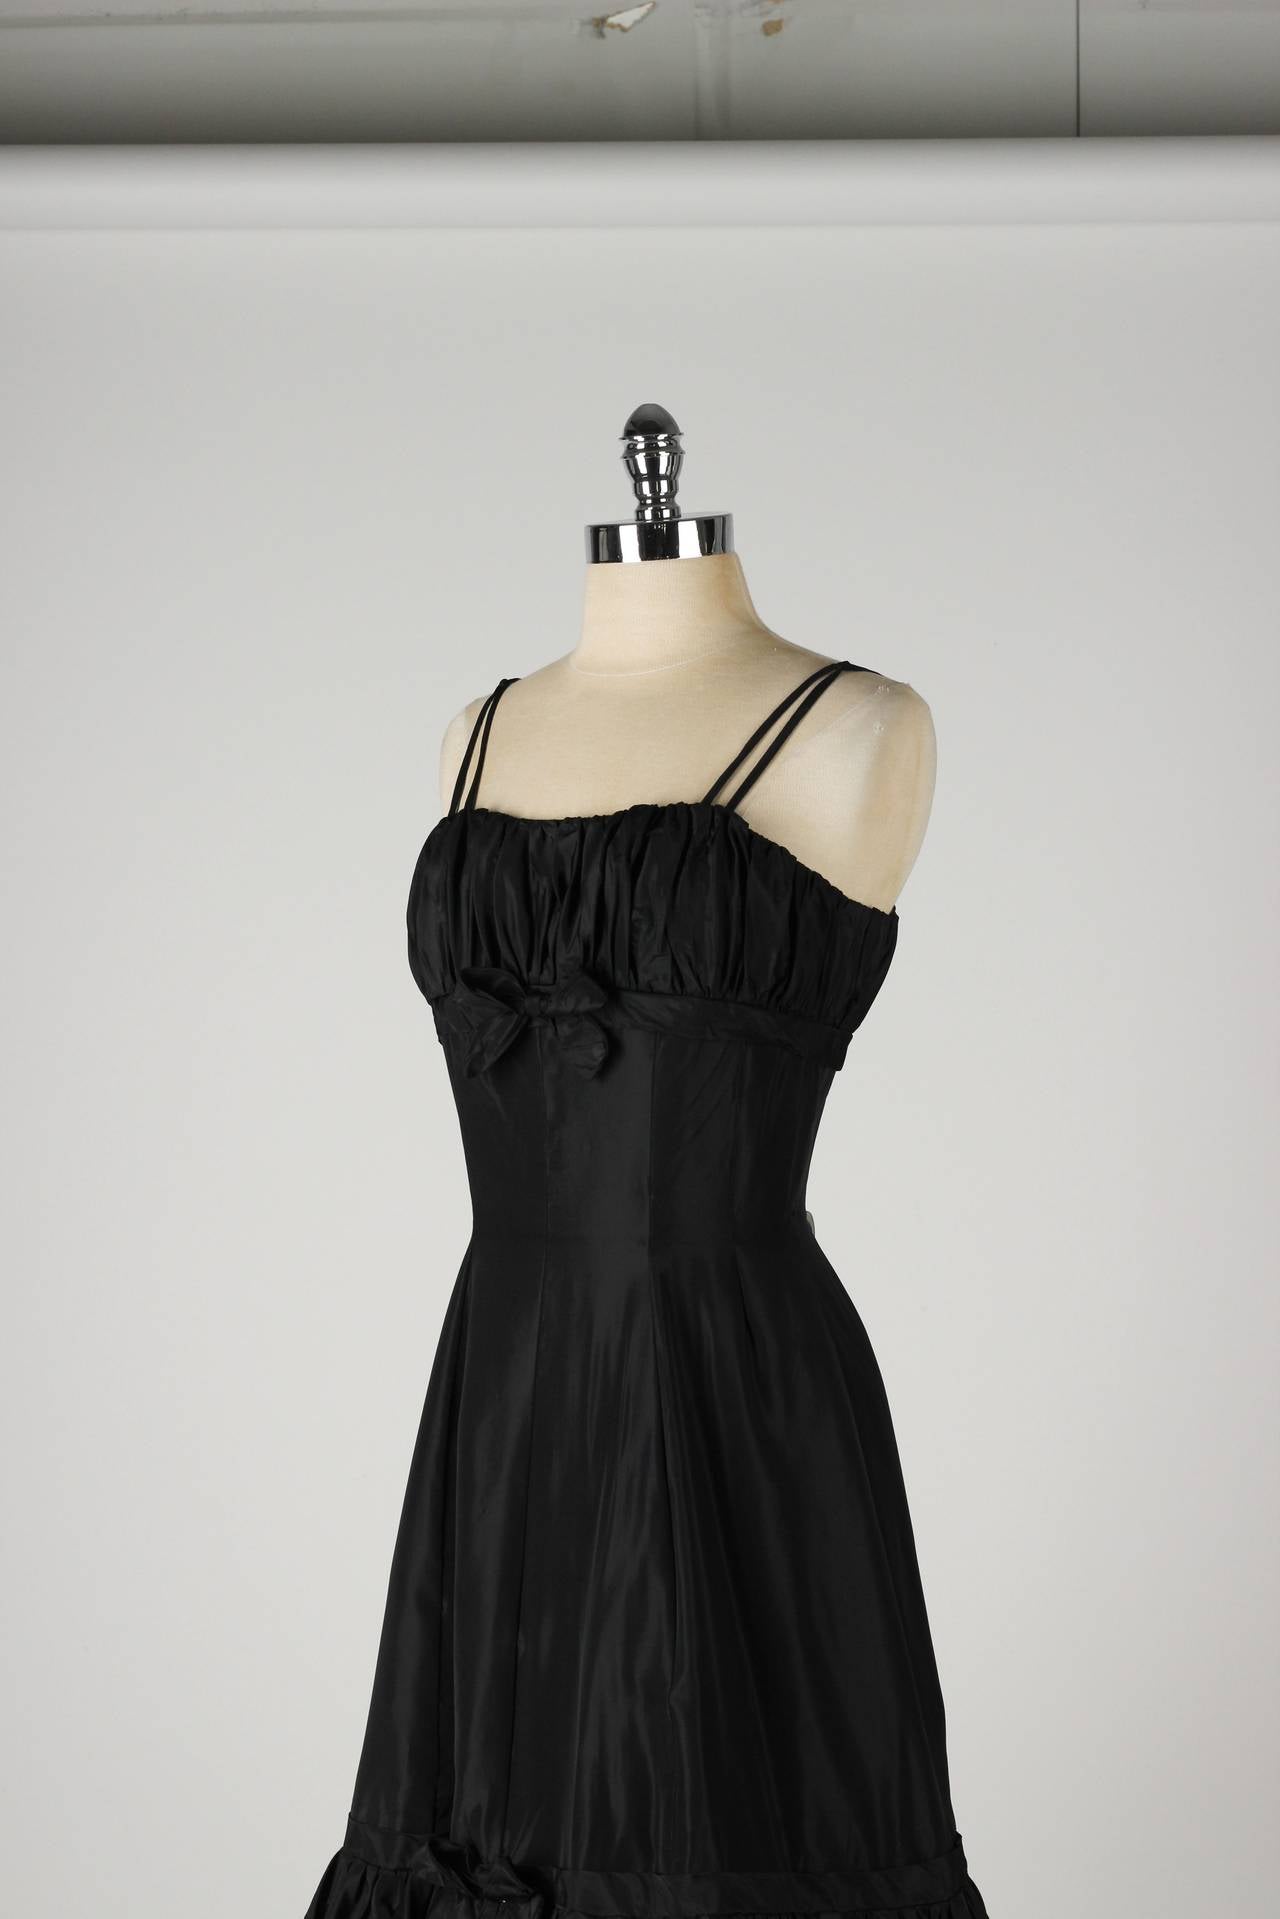 Vintage 1950s Emma Domb Black Taffeta Dress For Sale 1